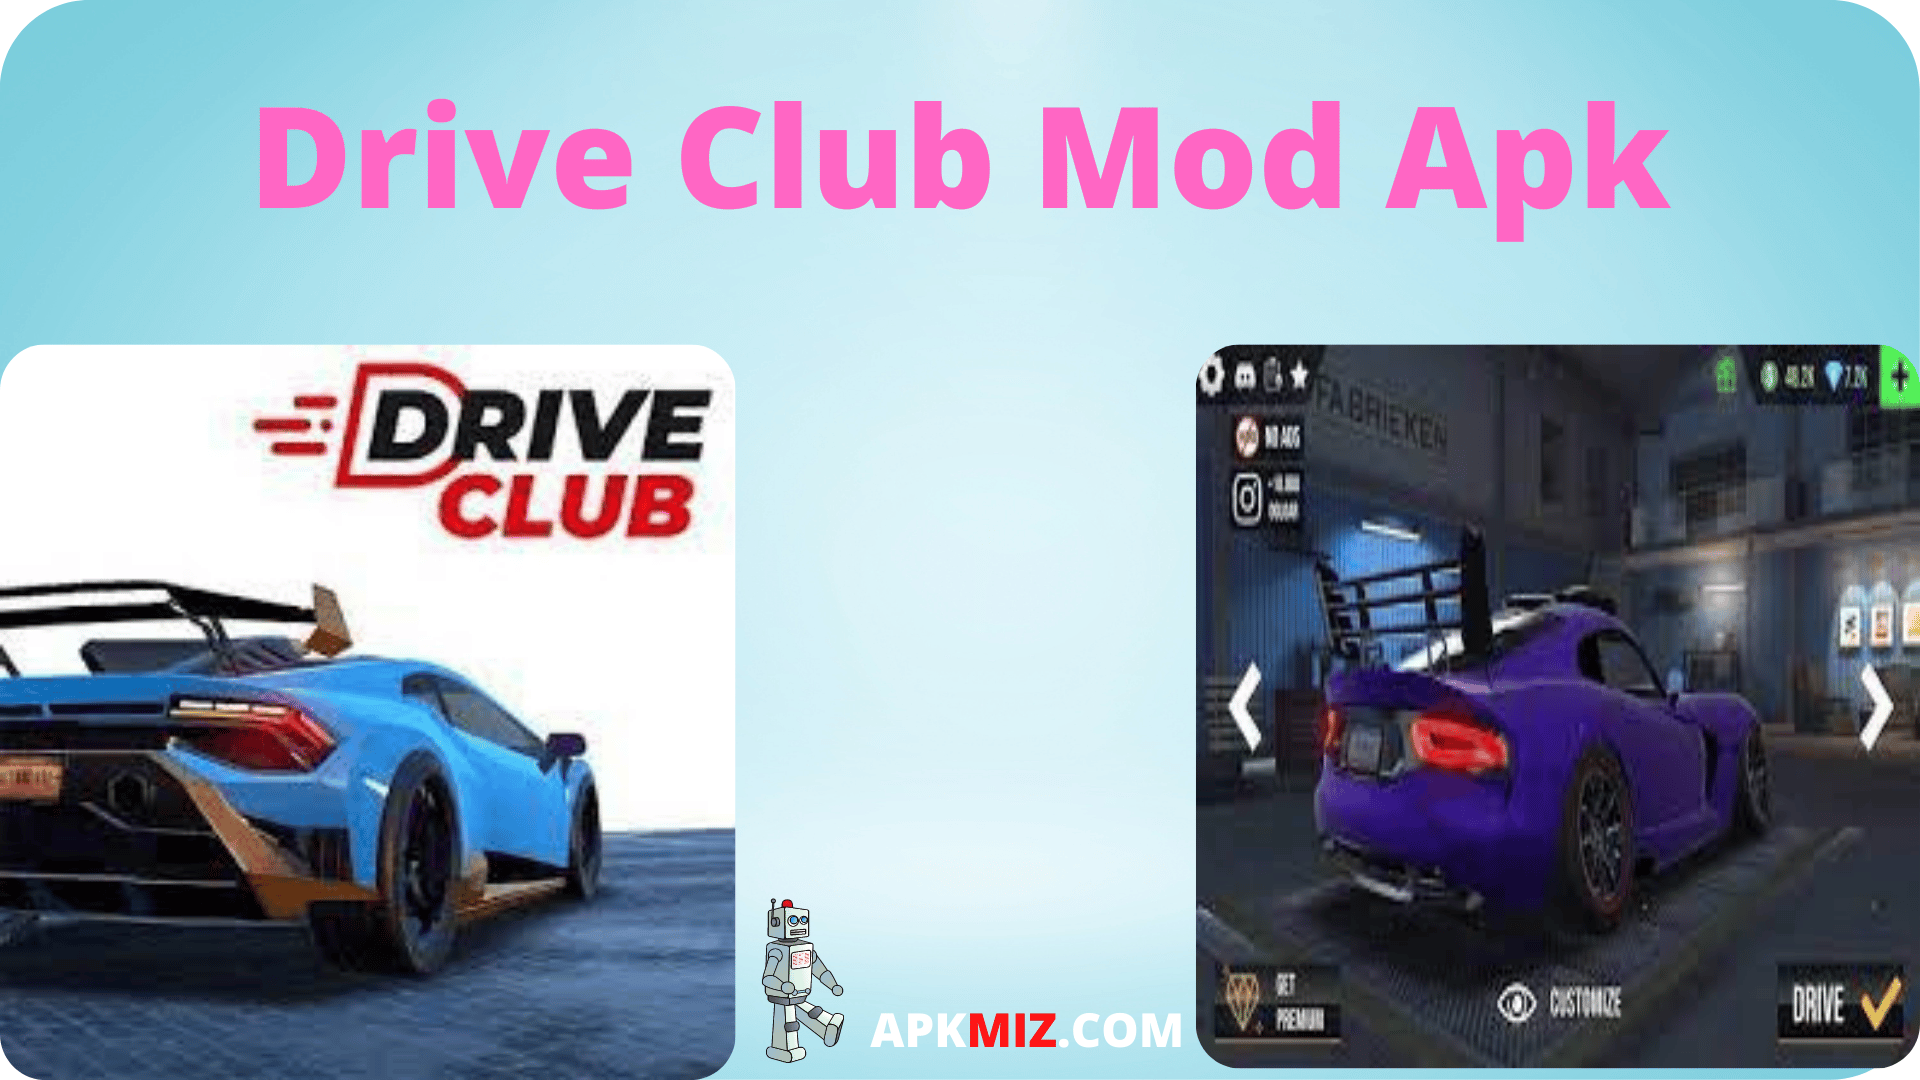 Drive Club Mod Apk